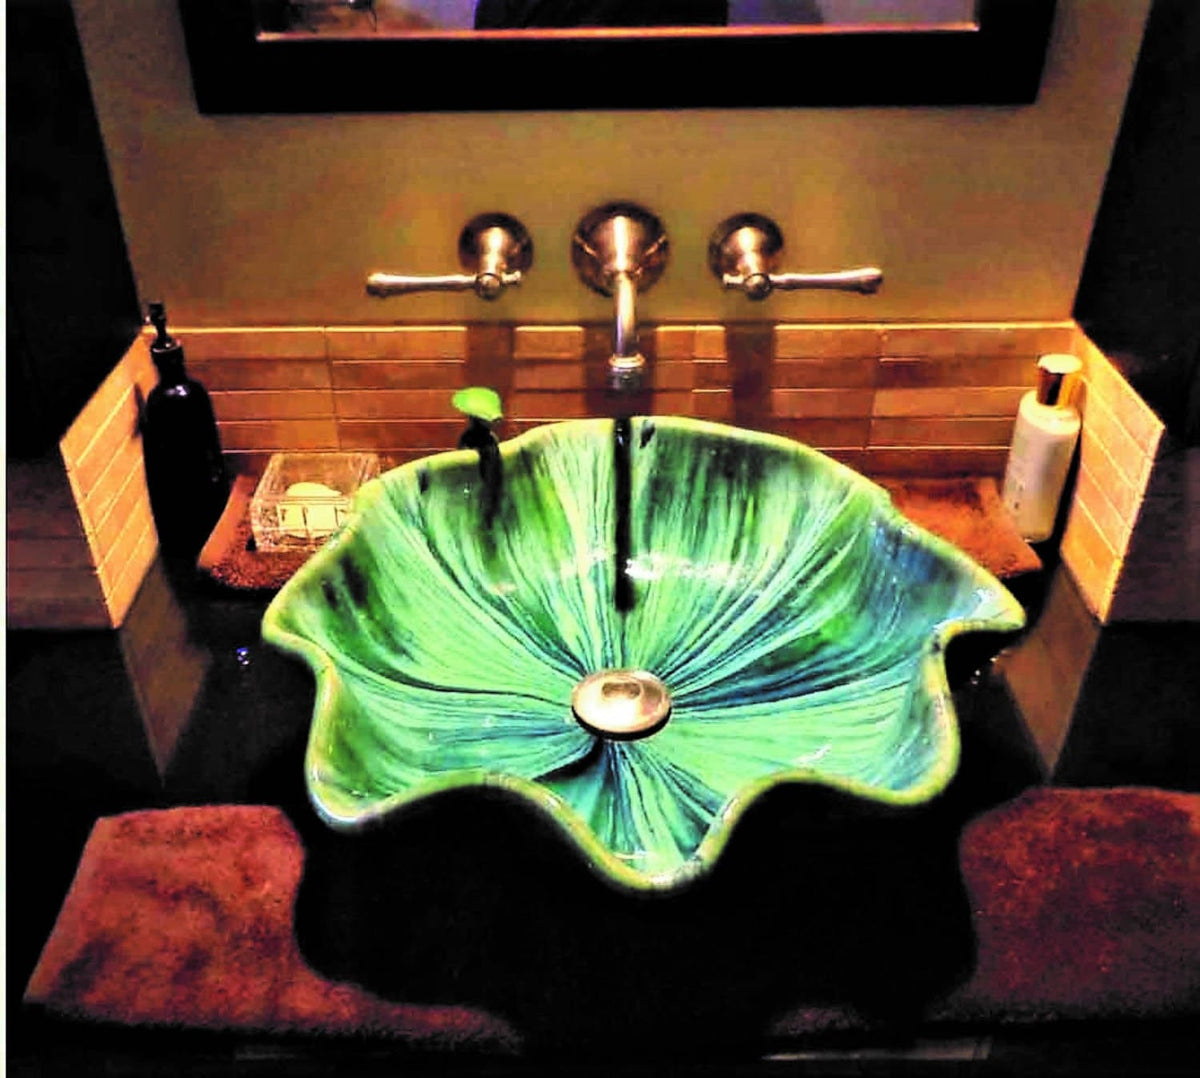 Ceramic Designs by Albert Bathroom Sink Beach House Bathroom Counter Sinks